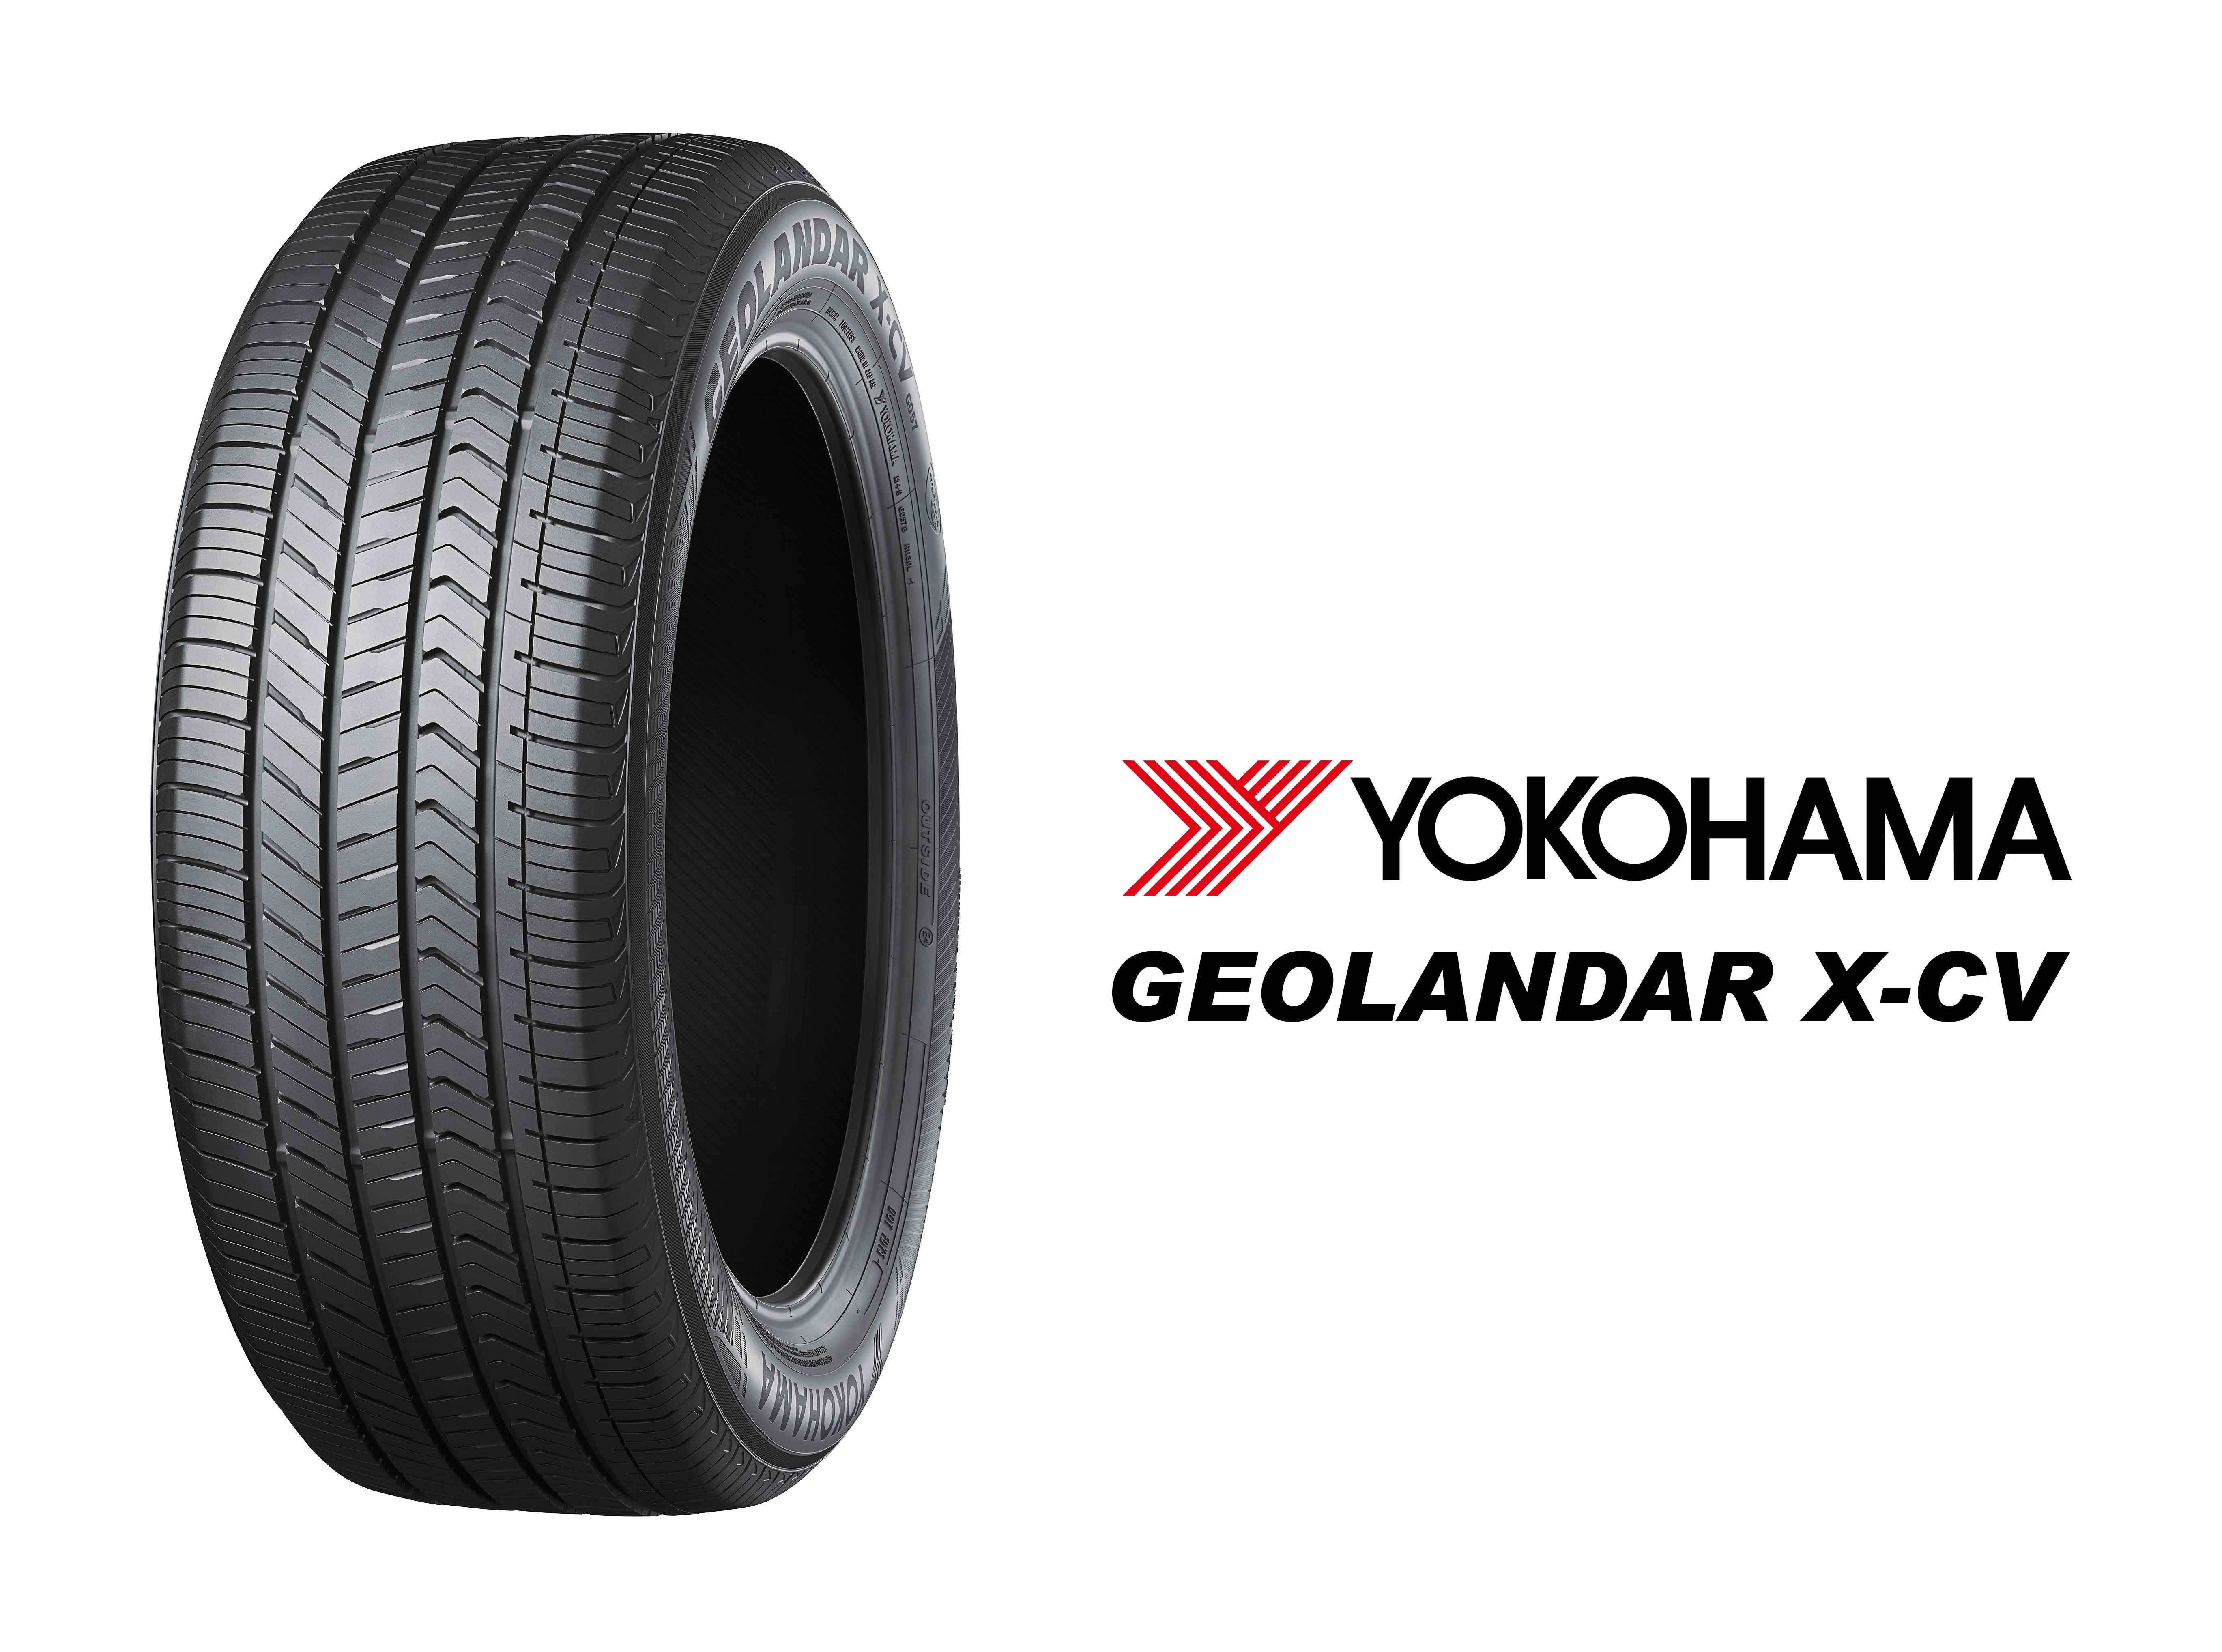 Yokohama Rubber’s GEOLANDAR X-CV is now coming factory-equipped on Toyota’s Lexus LX